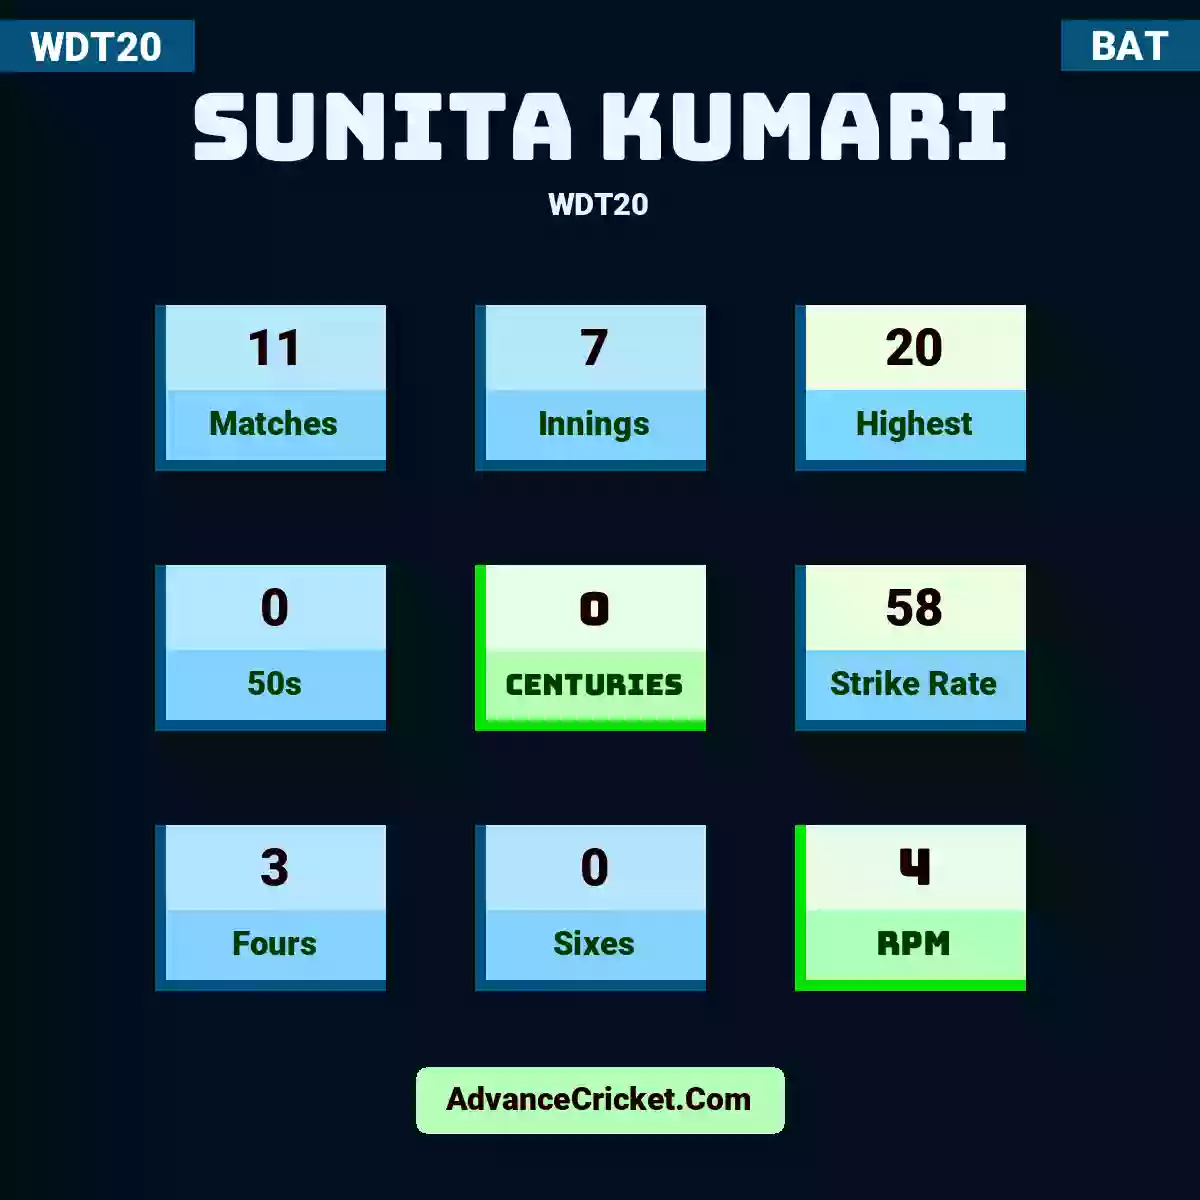 Sunita Kumari WDT20 , Sunita Kumari played 11 matches, scored 20 runs as highest, 0 half-centuries, and 0 centuries, with a strike rate of 58. S.Kumari hit 3 fours and 0 sixes, with an RPM of 4.